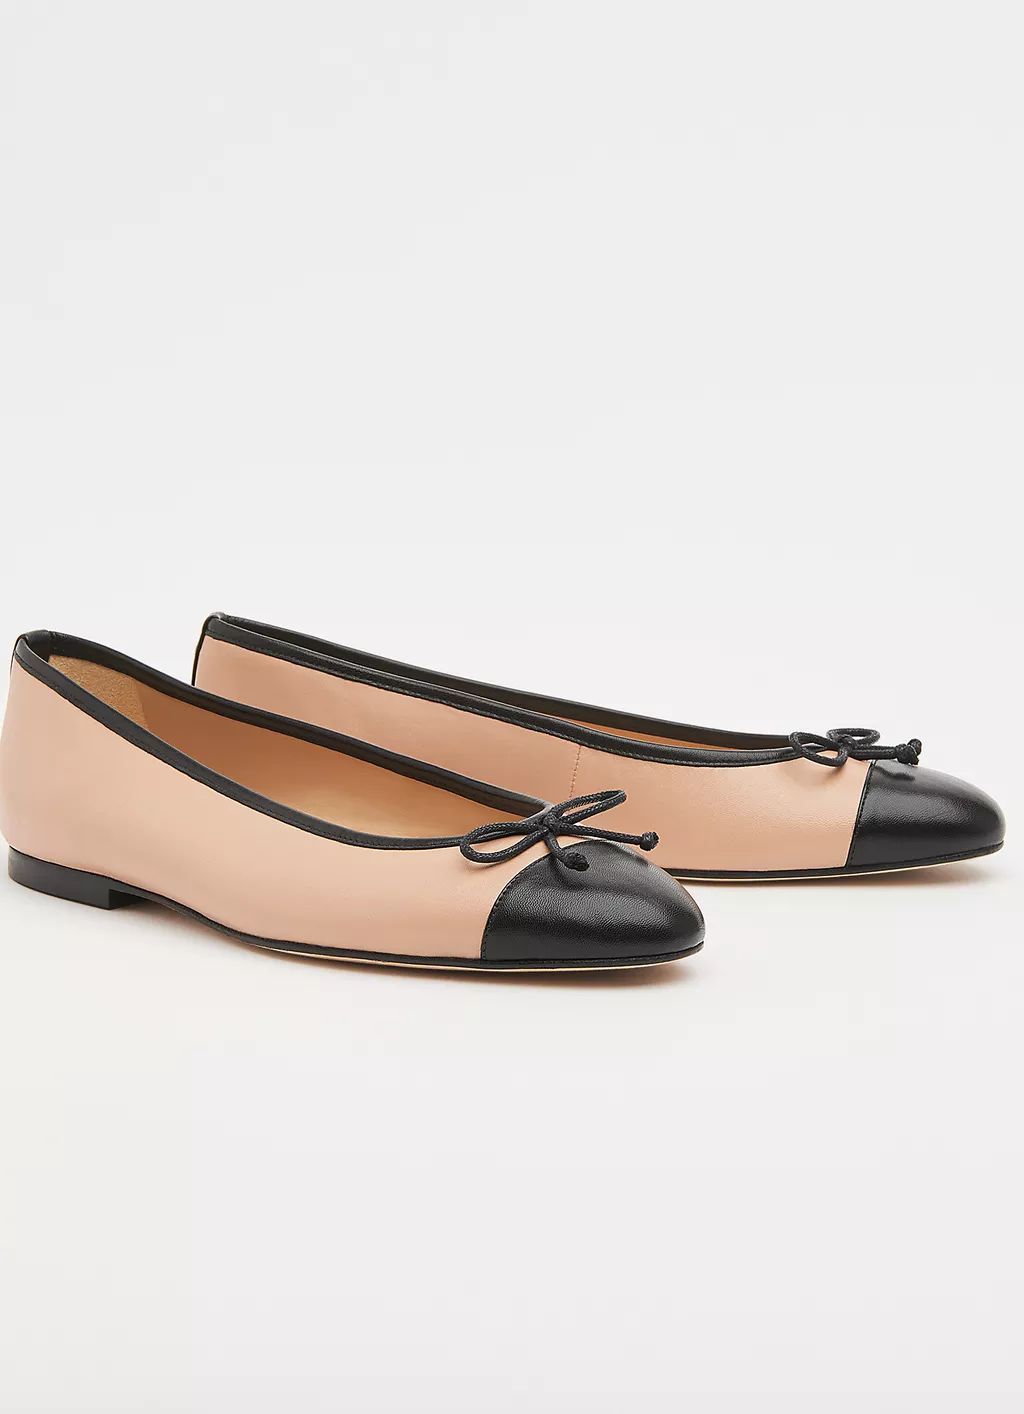 Kara Trench Black Nappa Leather Flats | Shoes | L.K.Bennett | L.K. Bennett (UK)